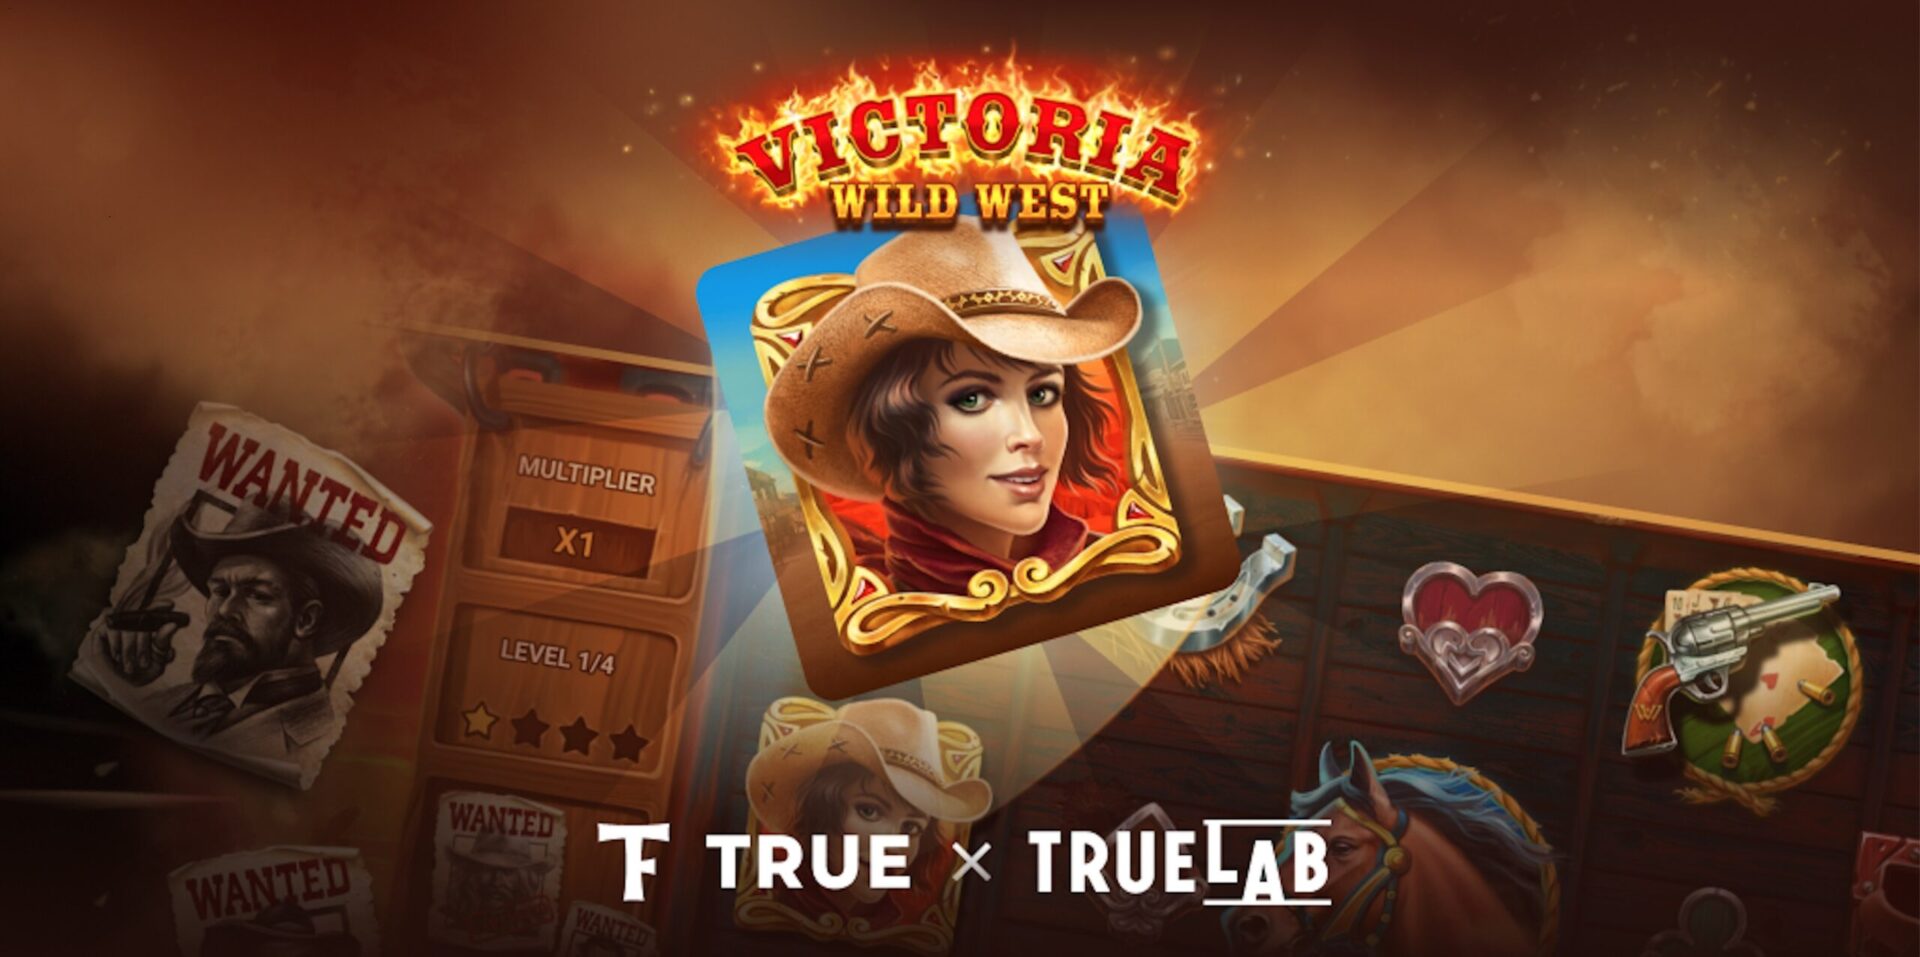 Image of Victoria Wild west casino slot